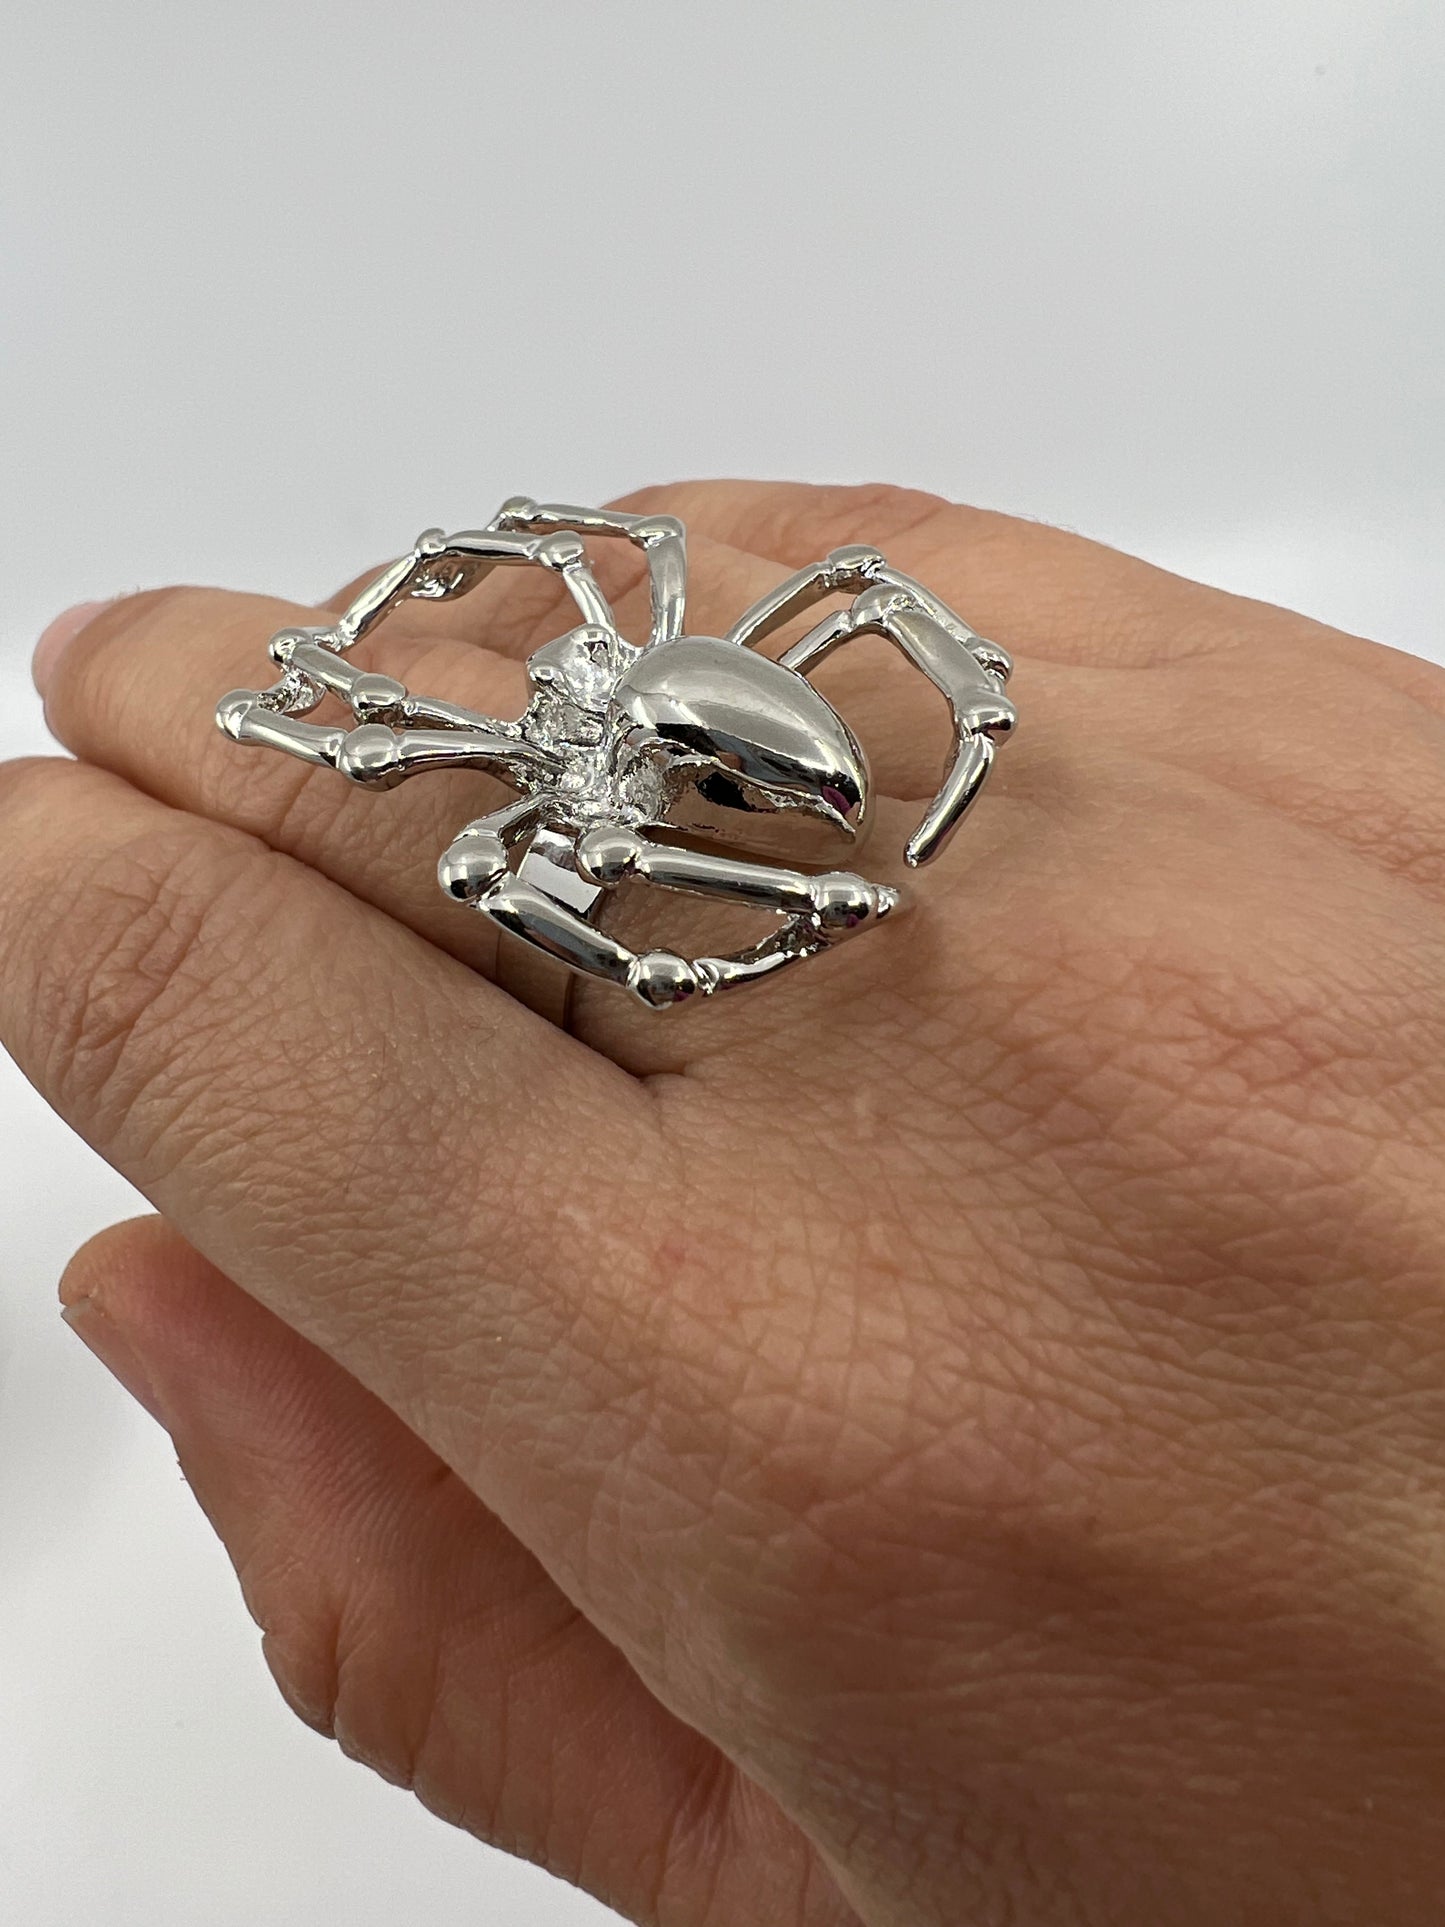 Spider Ring - Adjustable